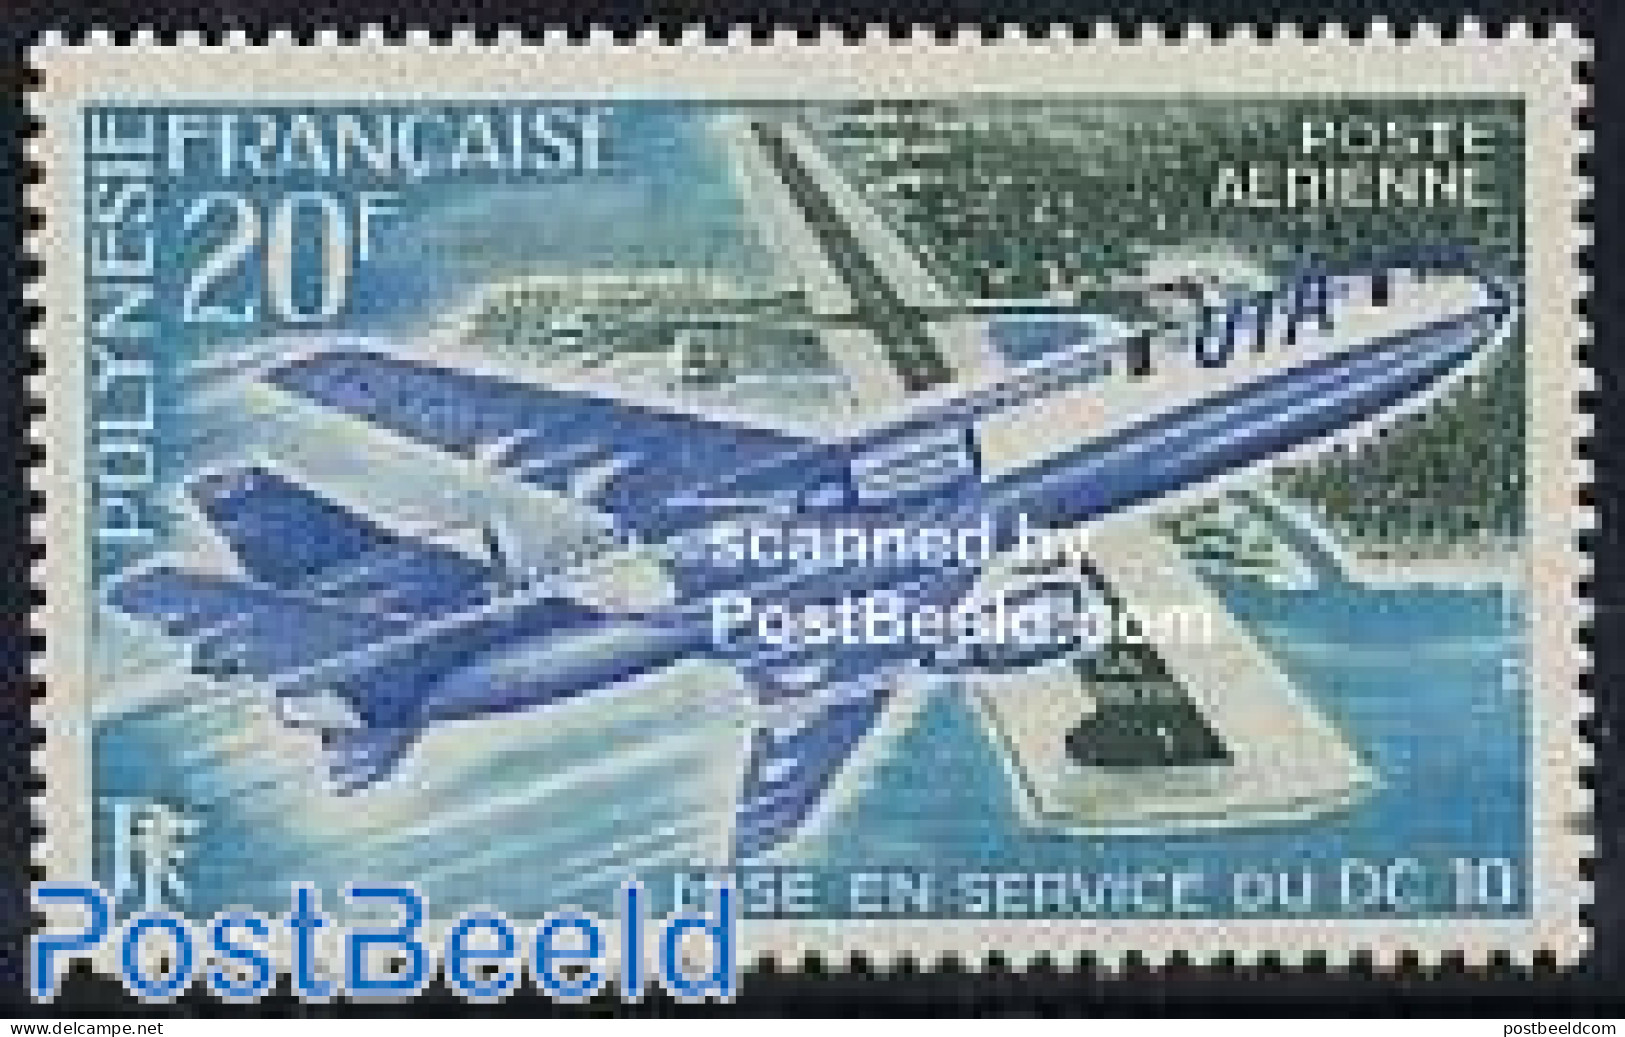 French Polynesia 1973 DC-10 1v, Mint NH, Transport - Aircraft & Aviation - Ongebruikt